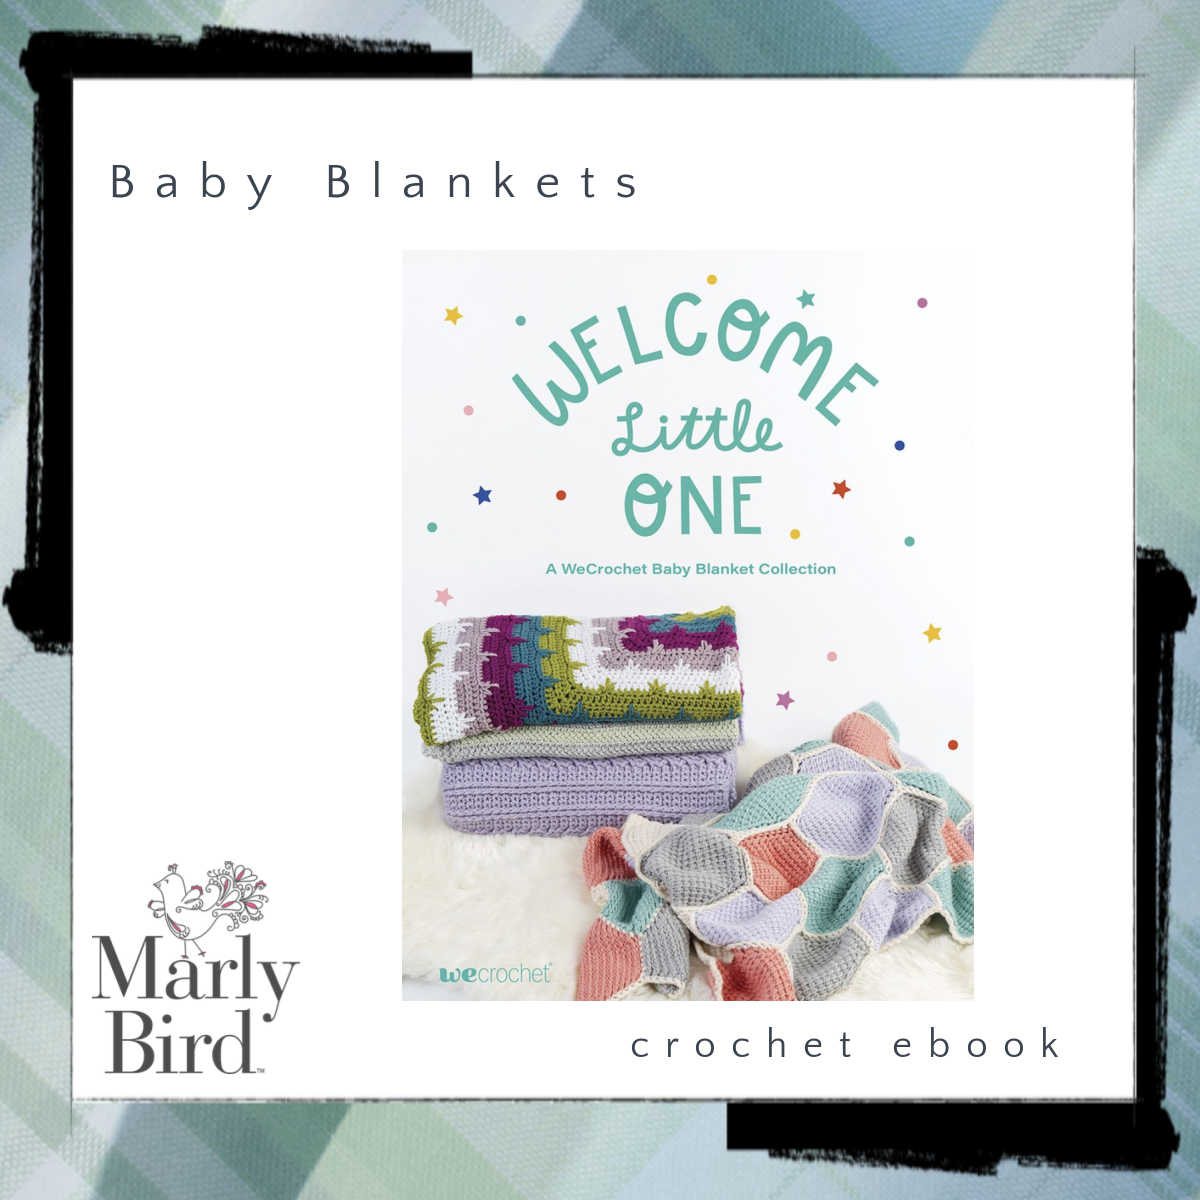 crochet ebook for baby blankets